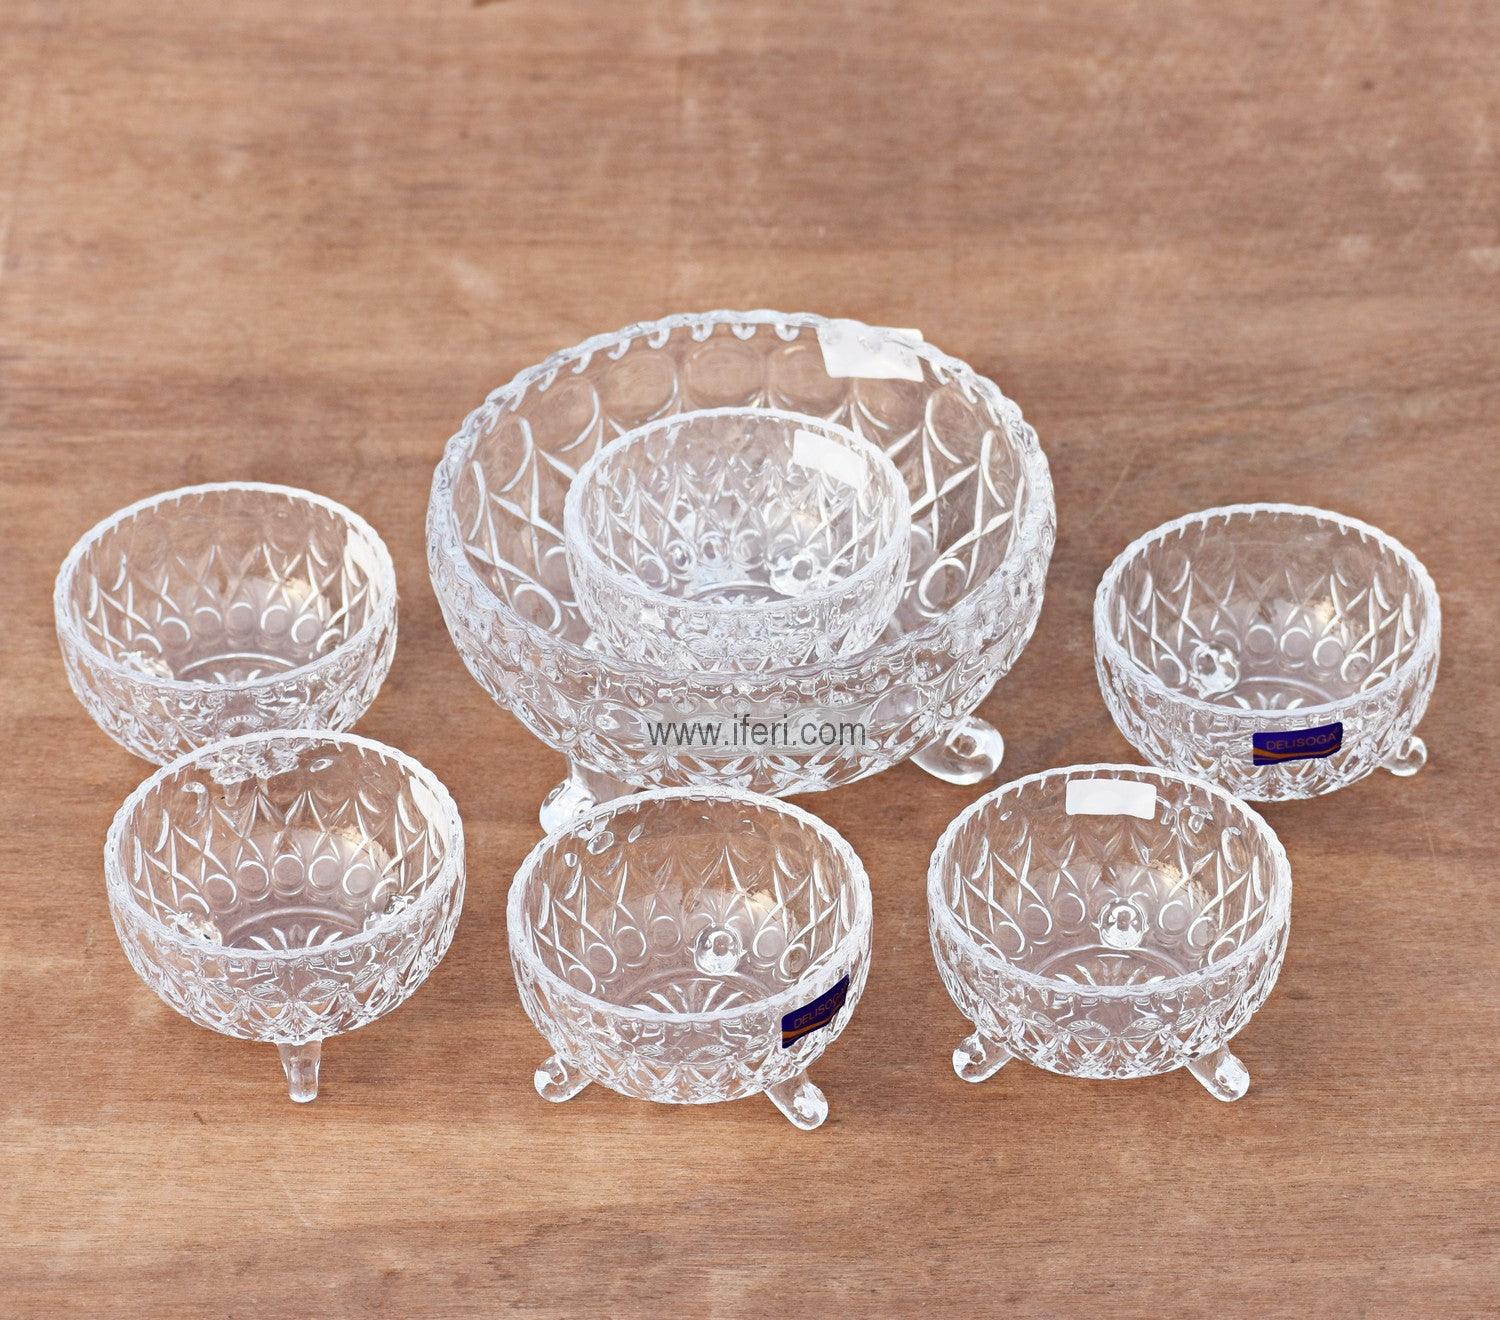 7 Pcs Glass Firni Bowl Set RH1063 Price in Bangladesh - iferi.com